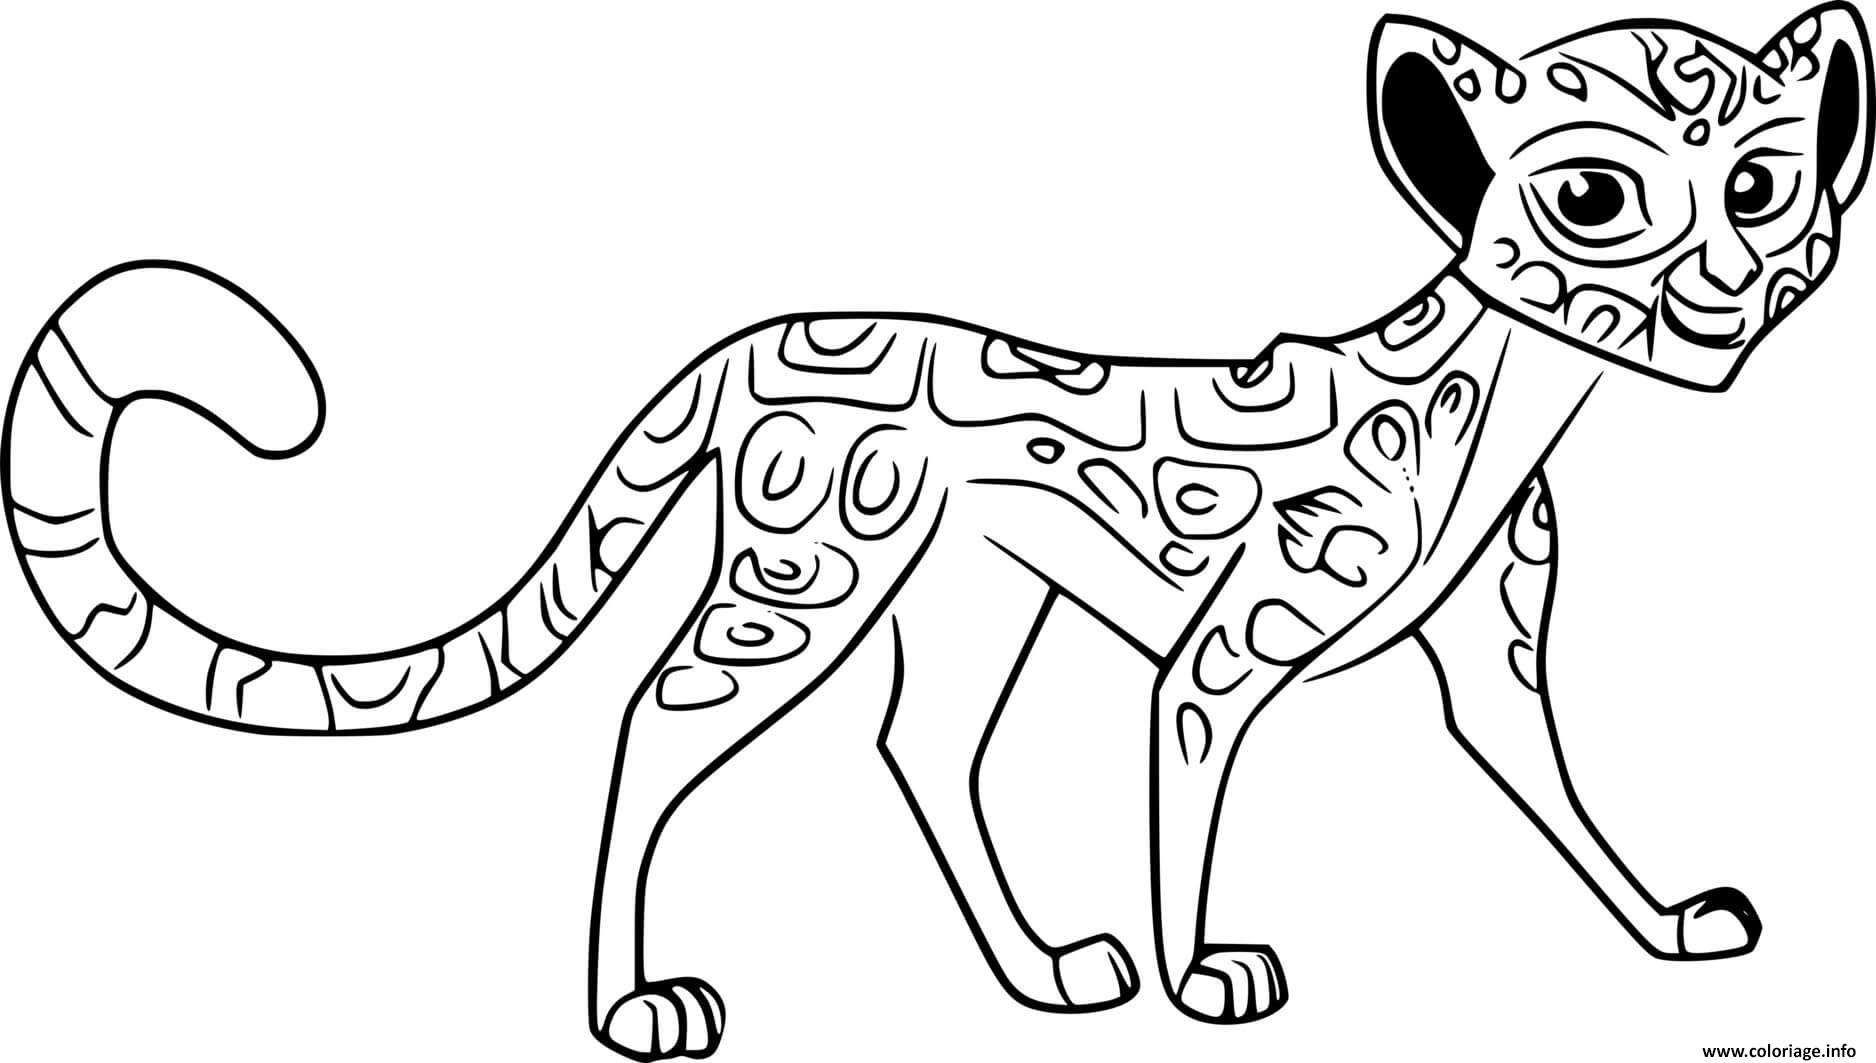 Dessin fuli cheetah Coloriage Gratuit à Imprimer